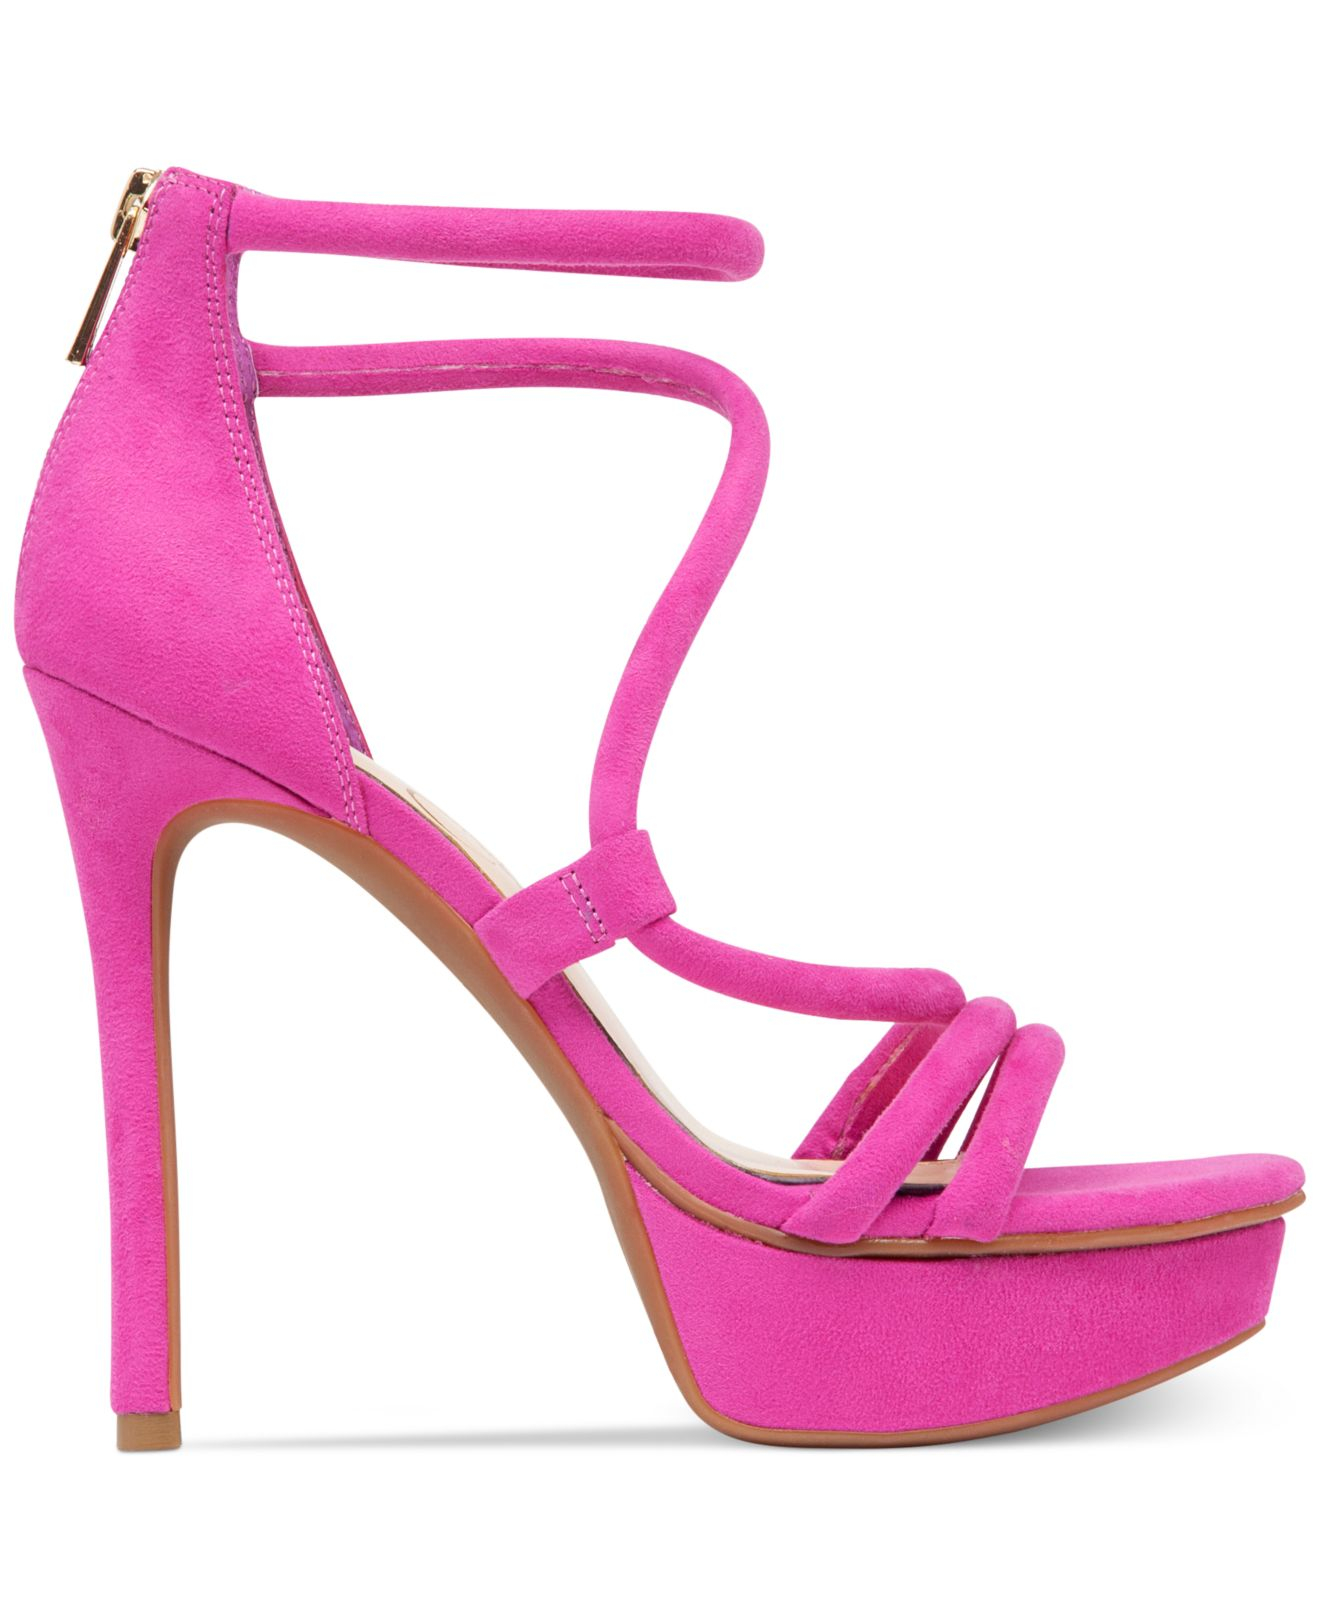 Jessica simpson Caela Asymmetrical Platform Dress Sandals in Pink ...